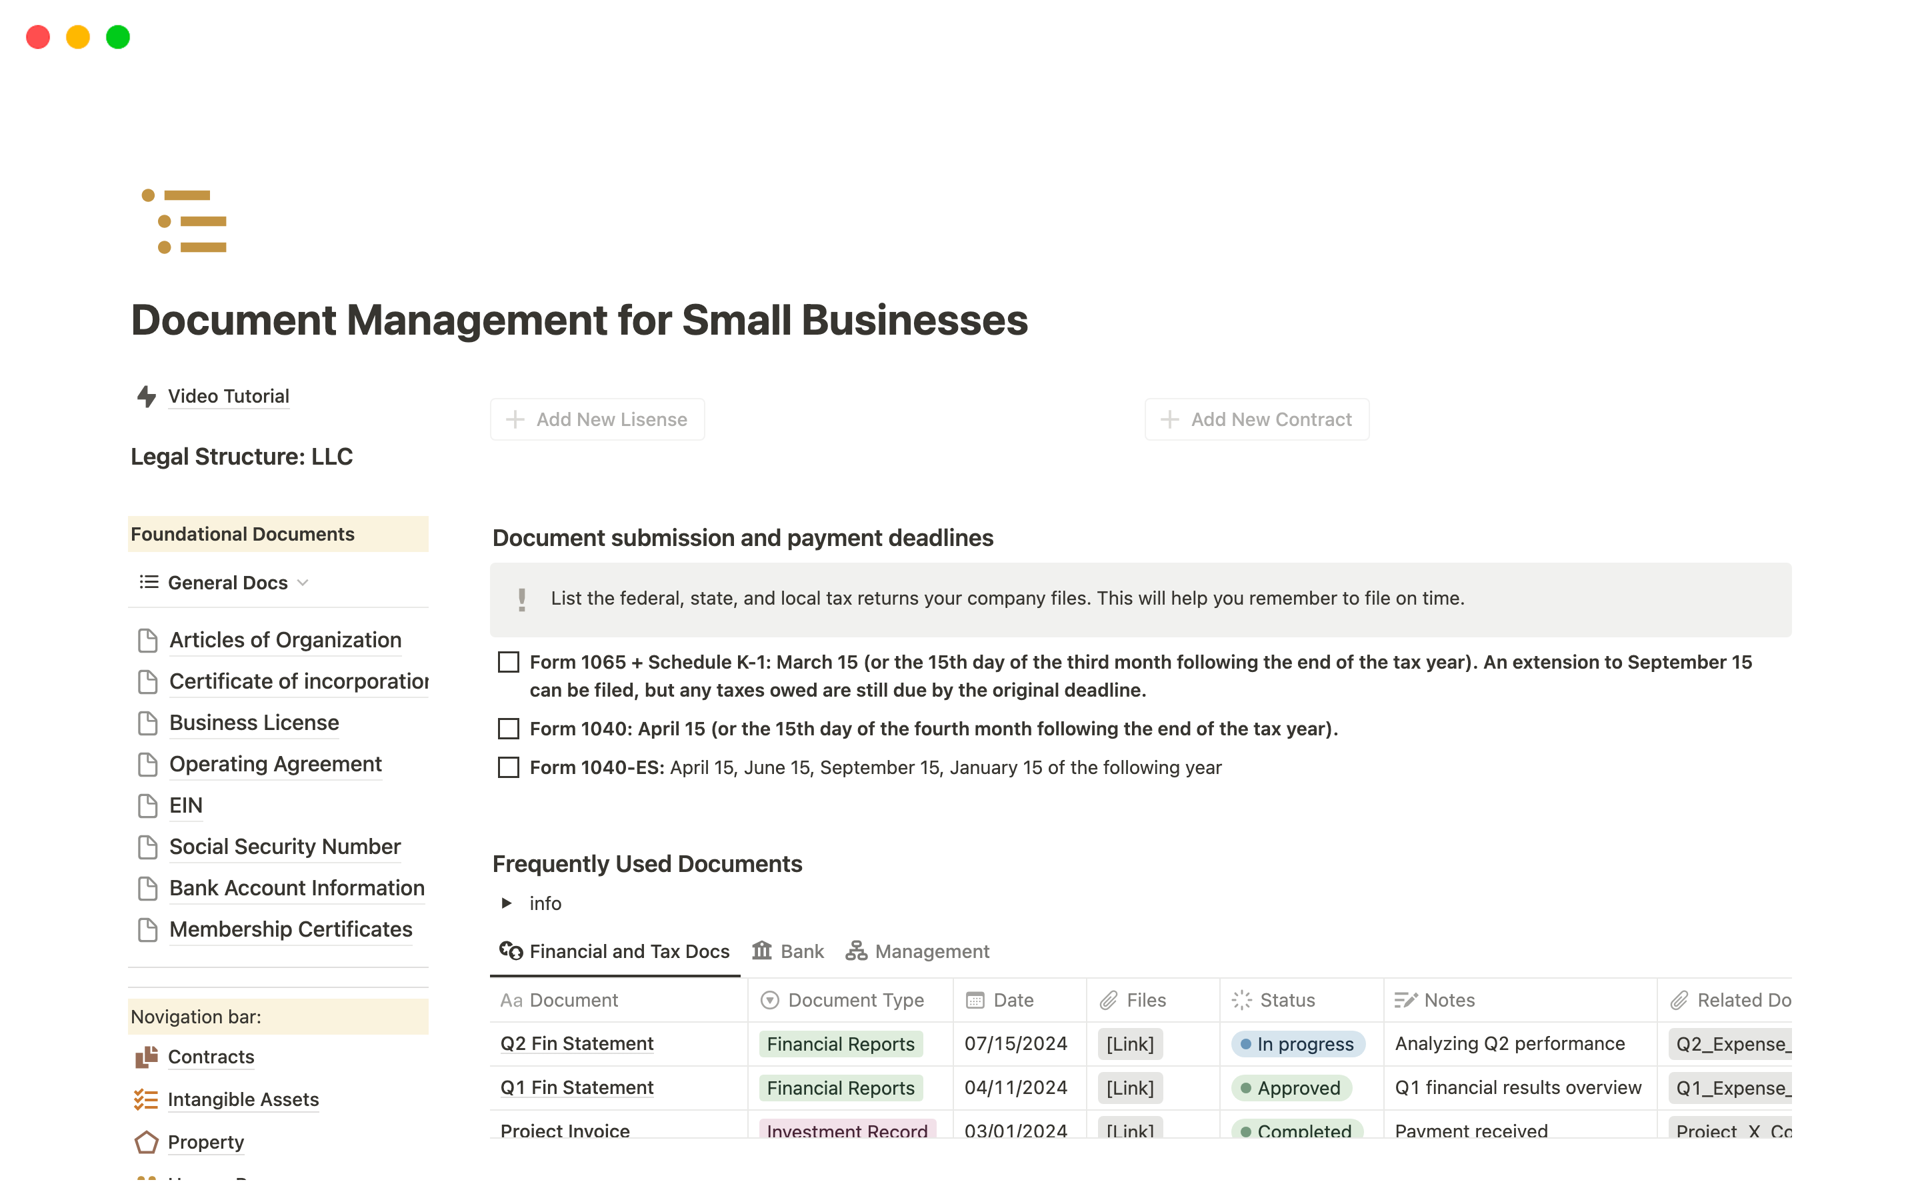 Document Management for Small Businesses님의 템플릿 미리보기